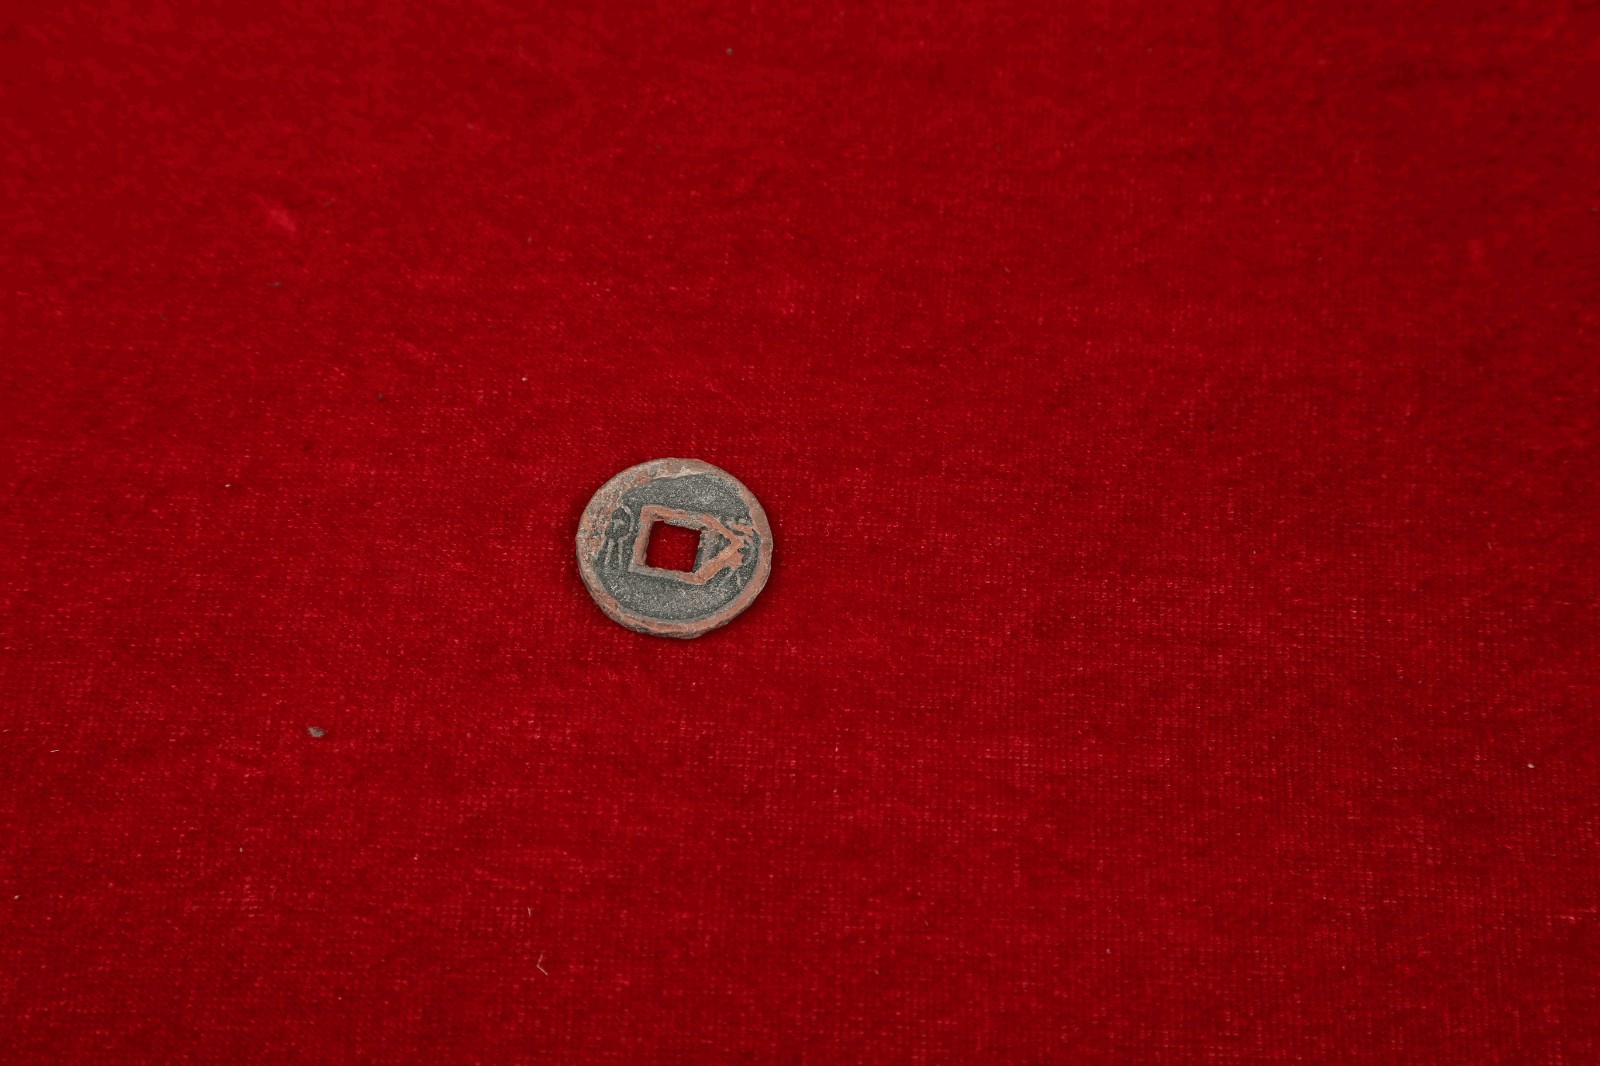 SDCS201709718—货泉铜钱，直径2.3米，厚度0.24厘米，重3.18克。.JPG